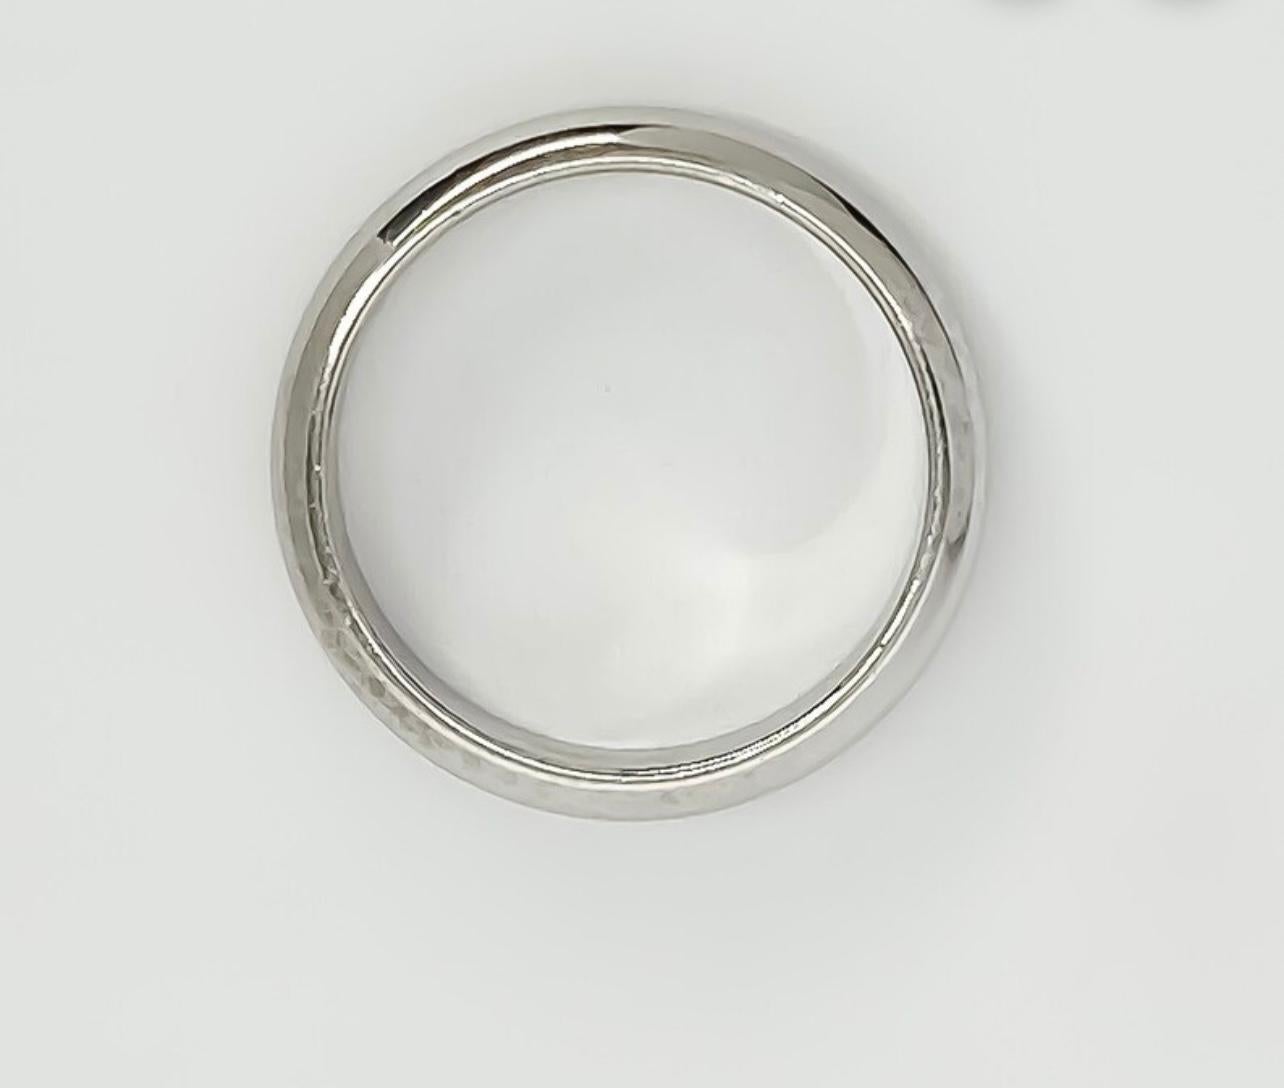 Authentic Cartier Platinum Wedding Band Ring 55, # DCP770 Original Receipt 6